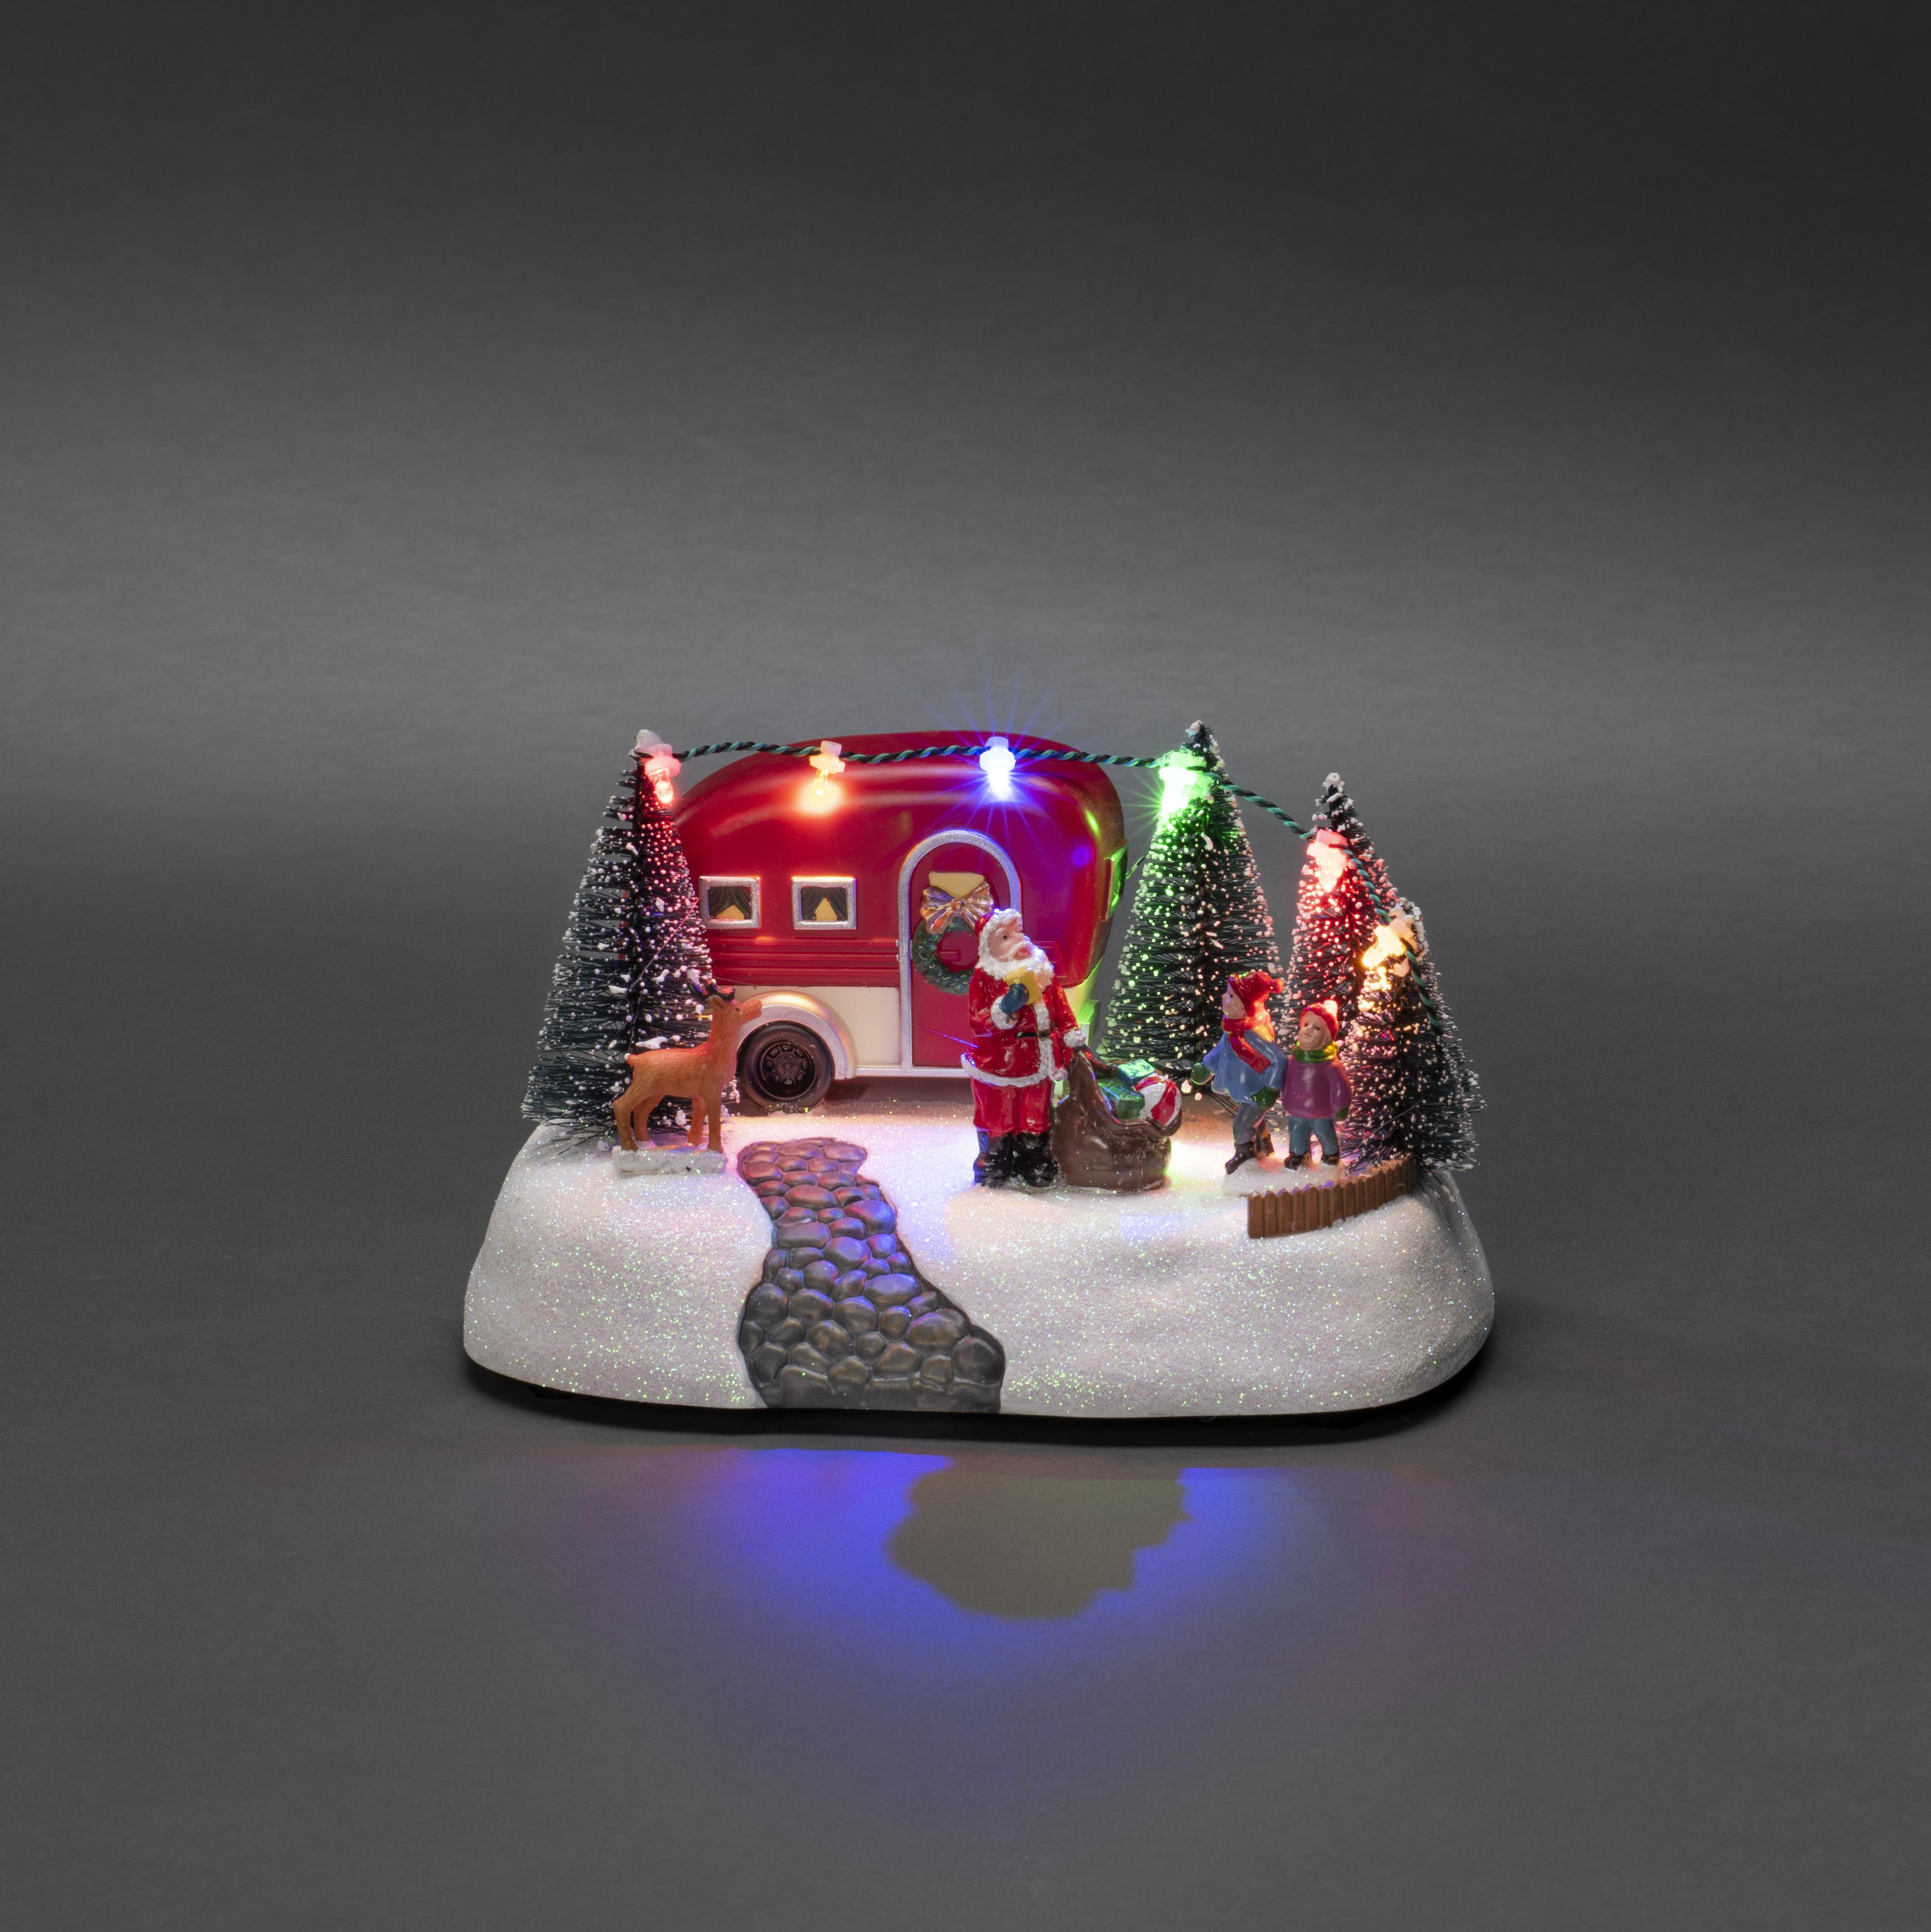 KONSTSMIDE 4238-000 LED Wohnwagen, 6 Bunte Dioden Mehrfarbig Weihnachtsbeleuchtung, Bunt